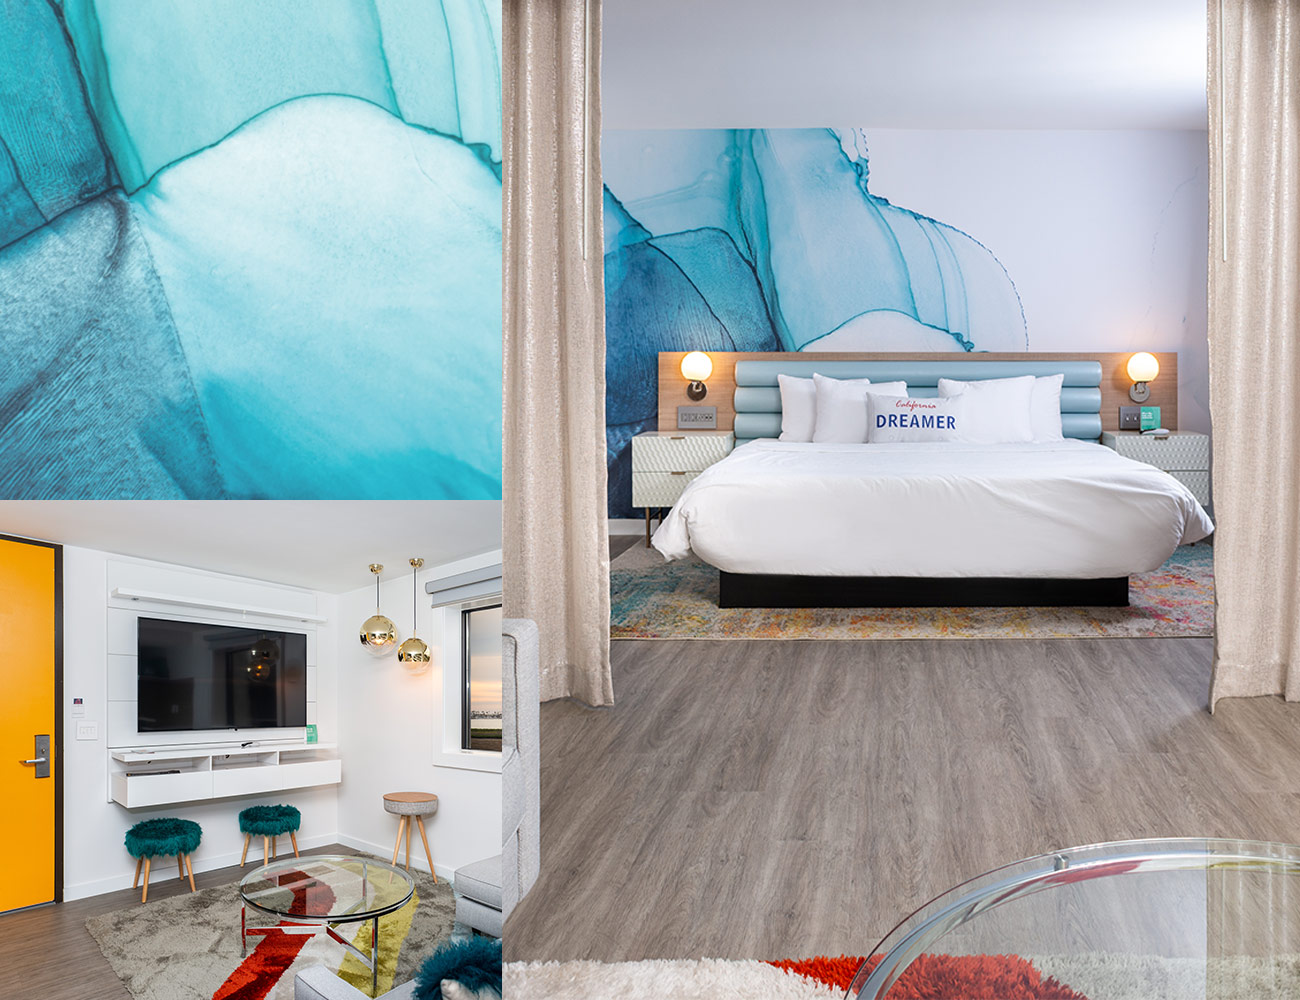 Rambler suites interior views of bed and wallpaper backsplash